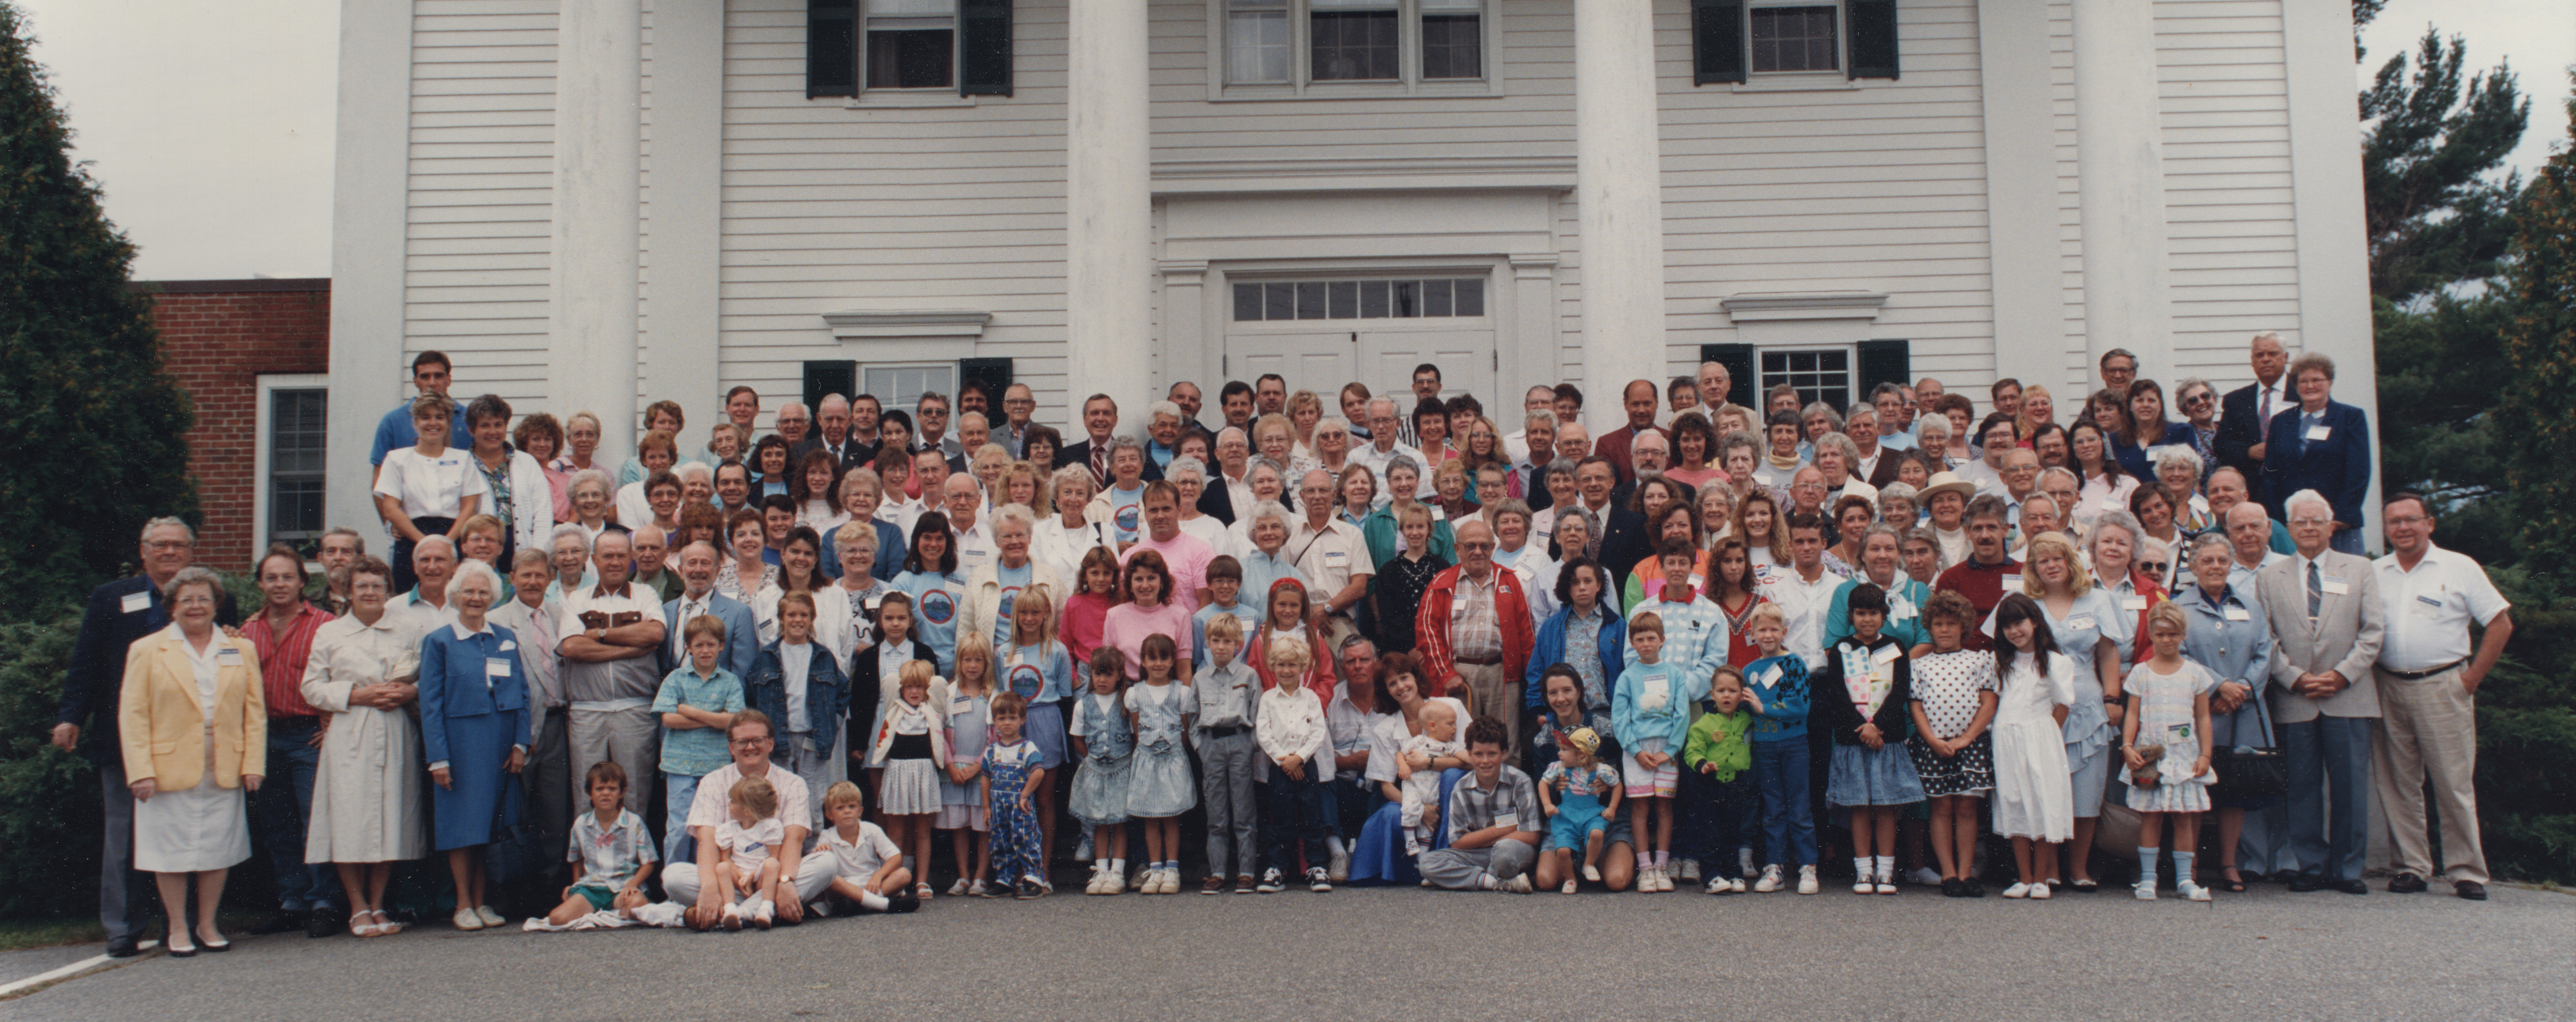 100th Locke Family Reunion